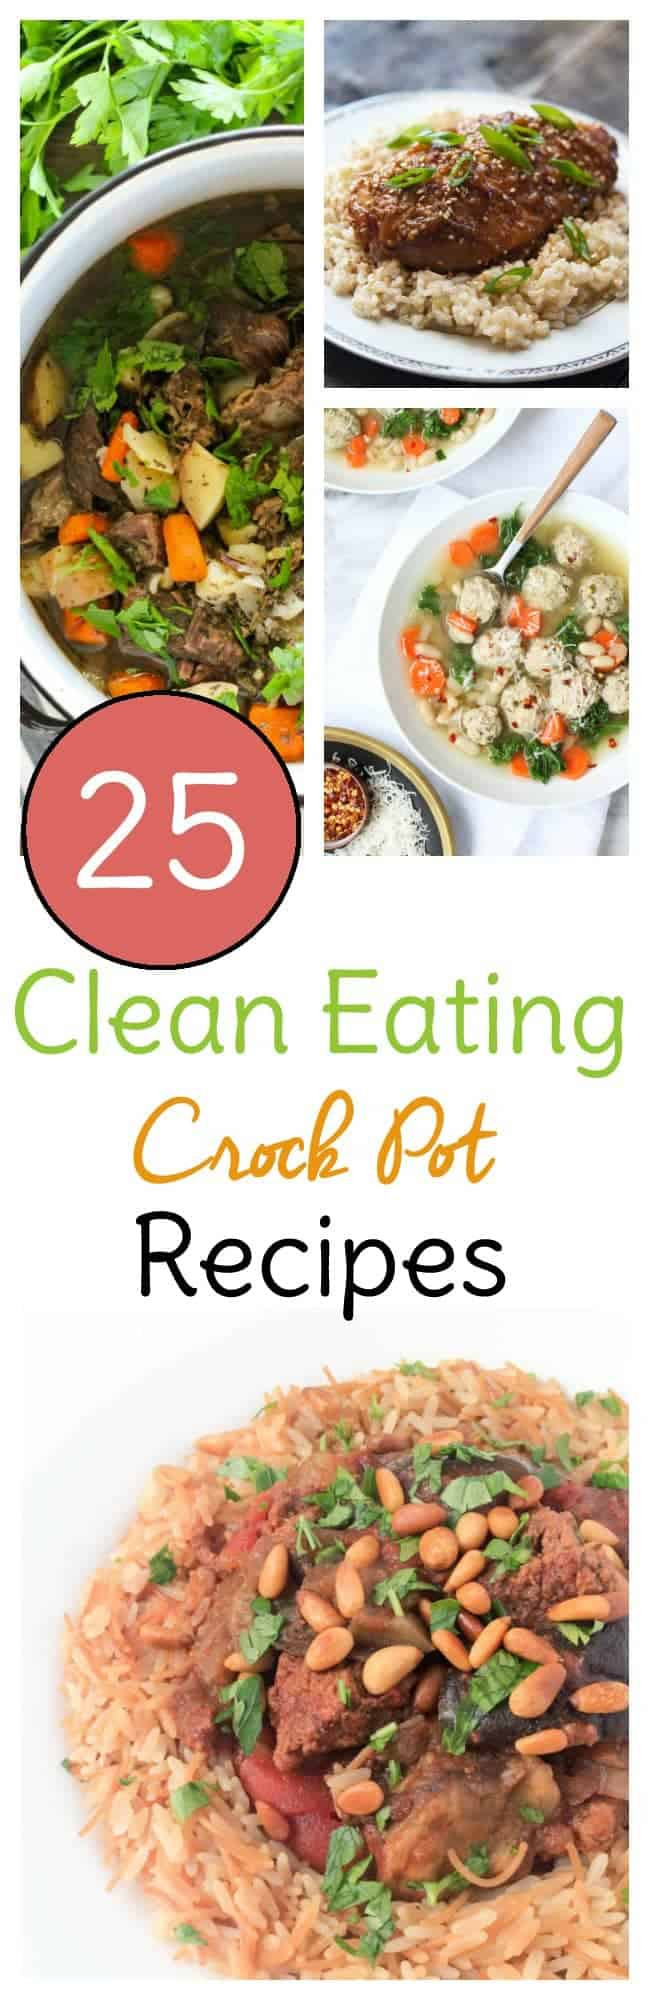 Clean Eating Crock Pot
 Clean Eating Crock Pot Recipes Sweet T Makes Three